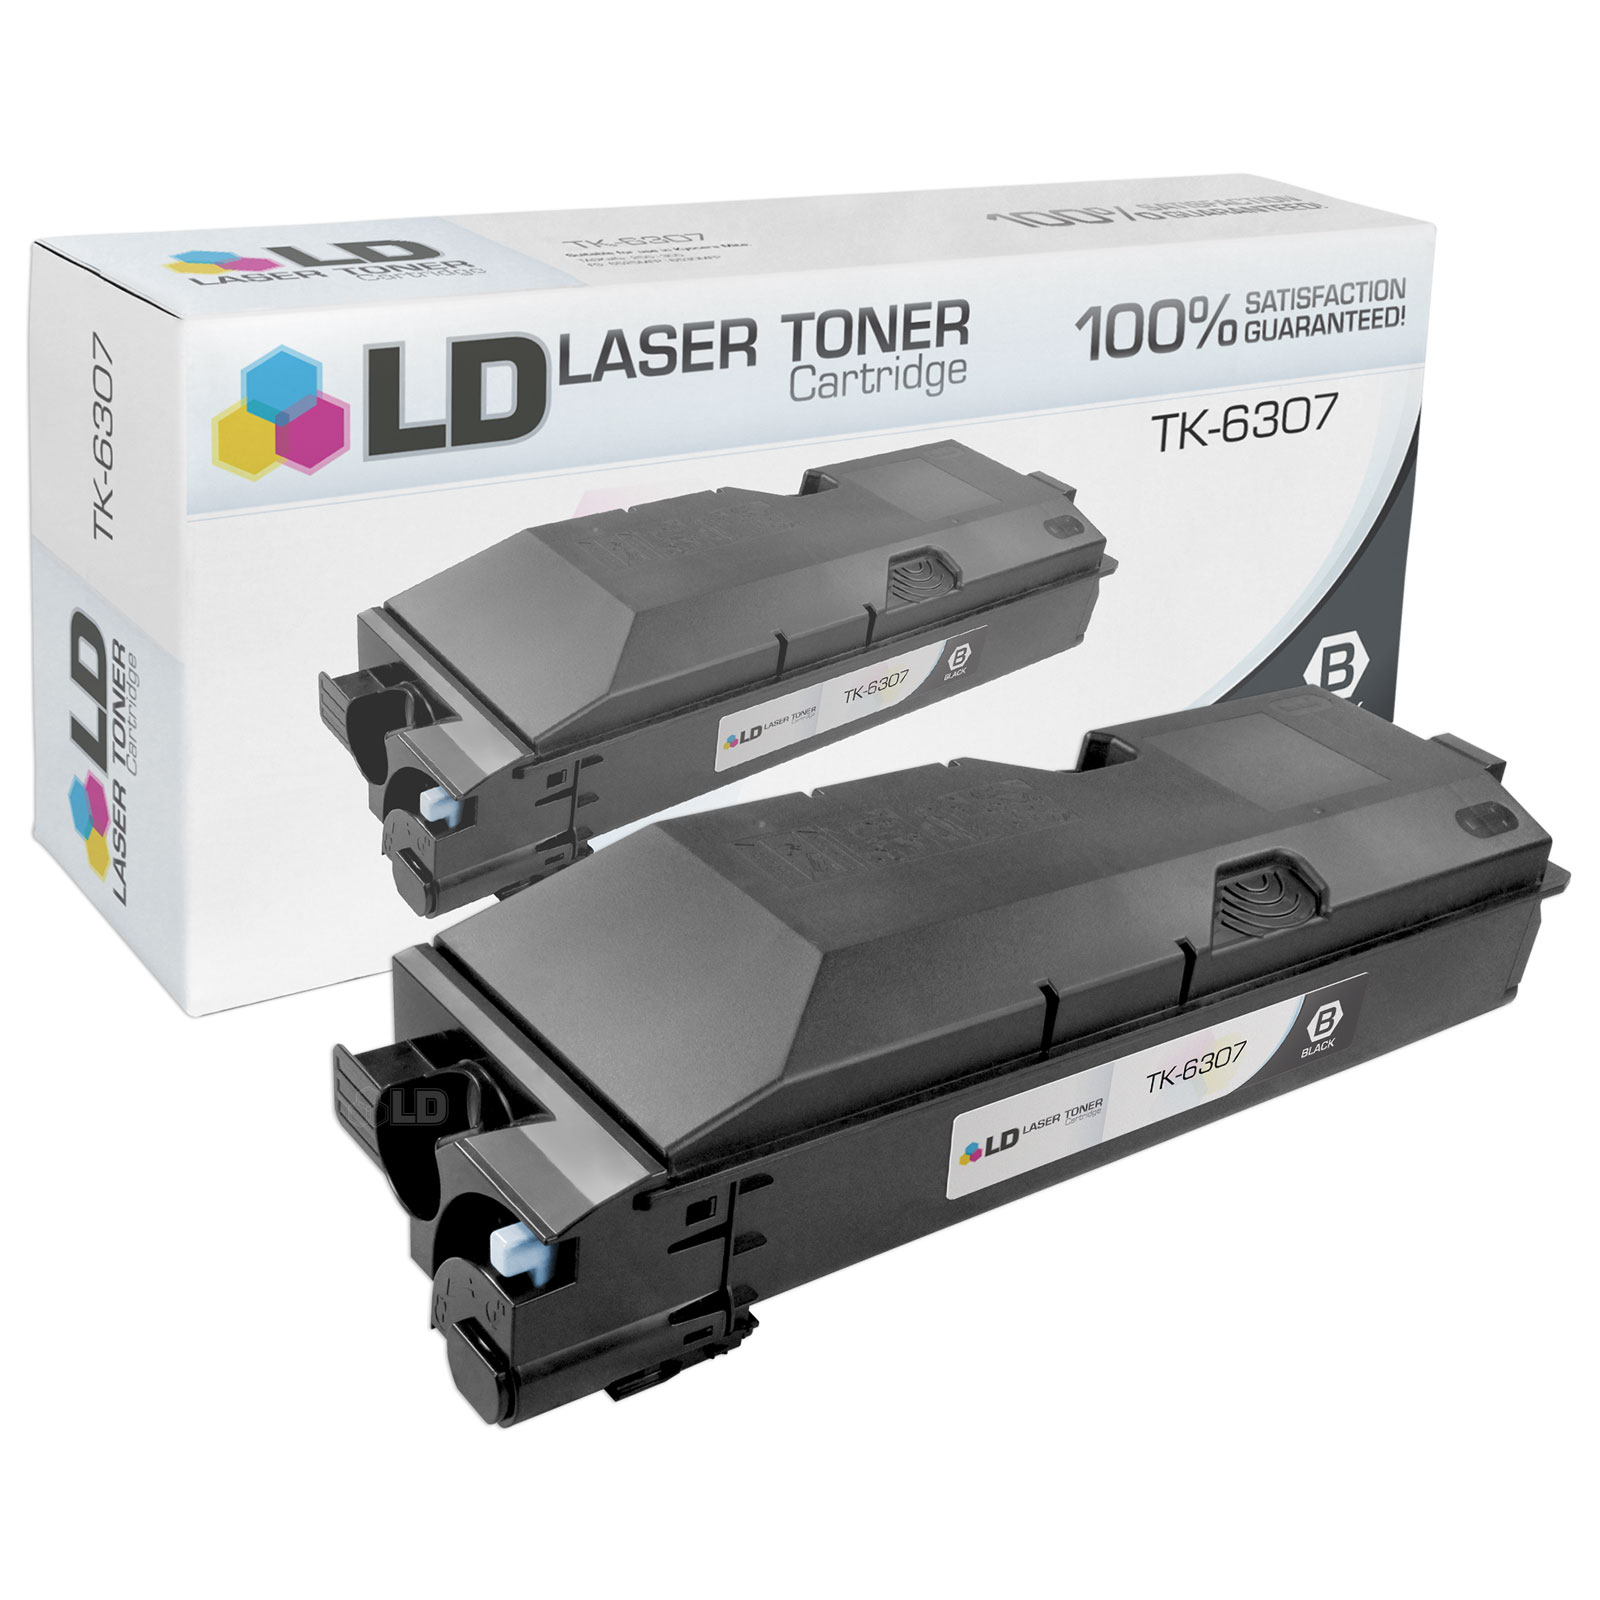 LD Compatible Replacement for Kyocera Mita TK-6307 Black Laser Toner Cartridge for use in Kyocera-Mita TASKalfa 3500i, 4500i, and 5500i s - image 1 of 1